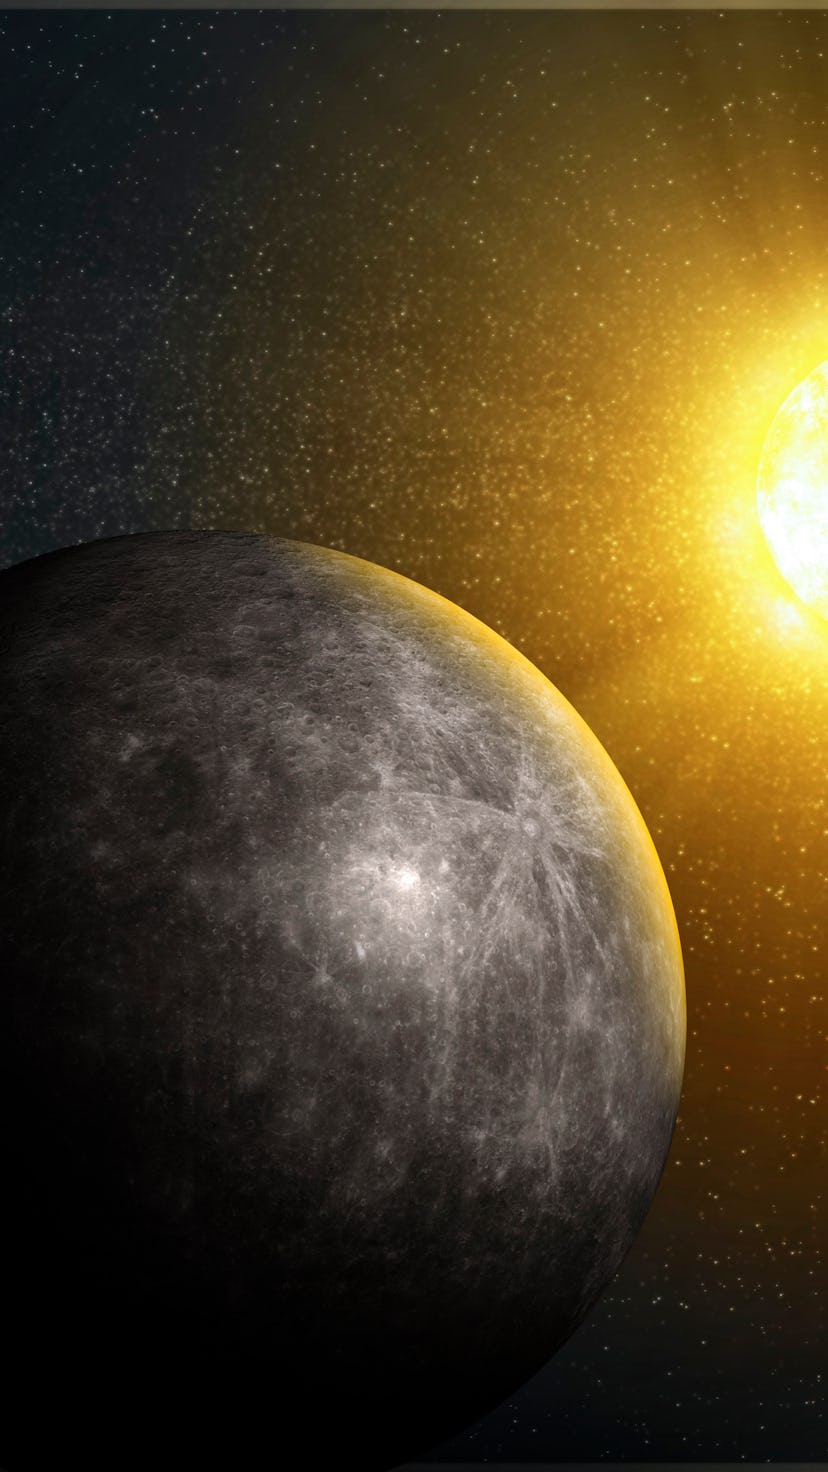 Mercury retrograde fall 2021 begins on September 27 in the sign of Libra